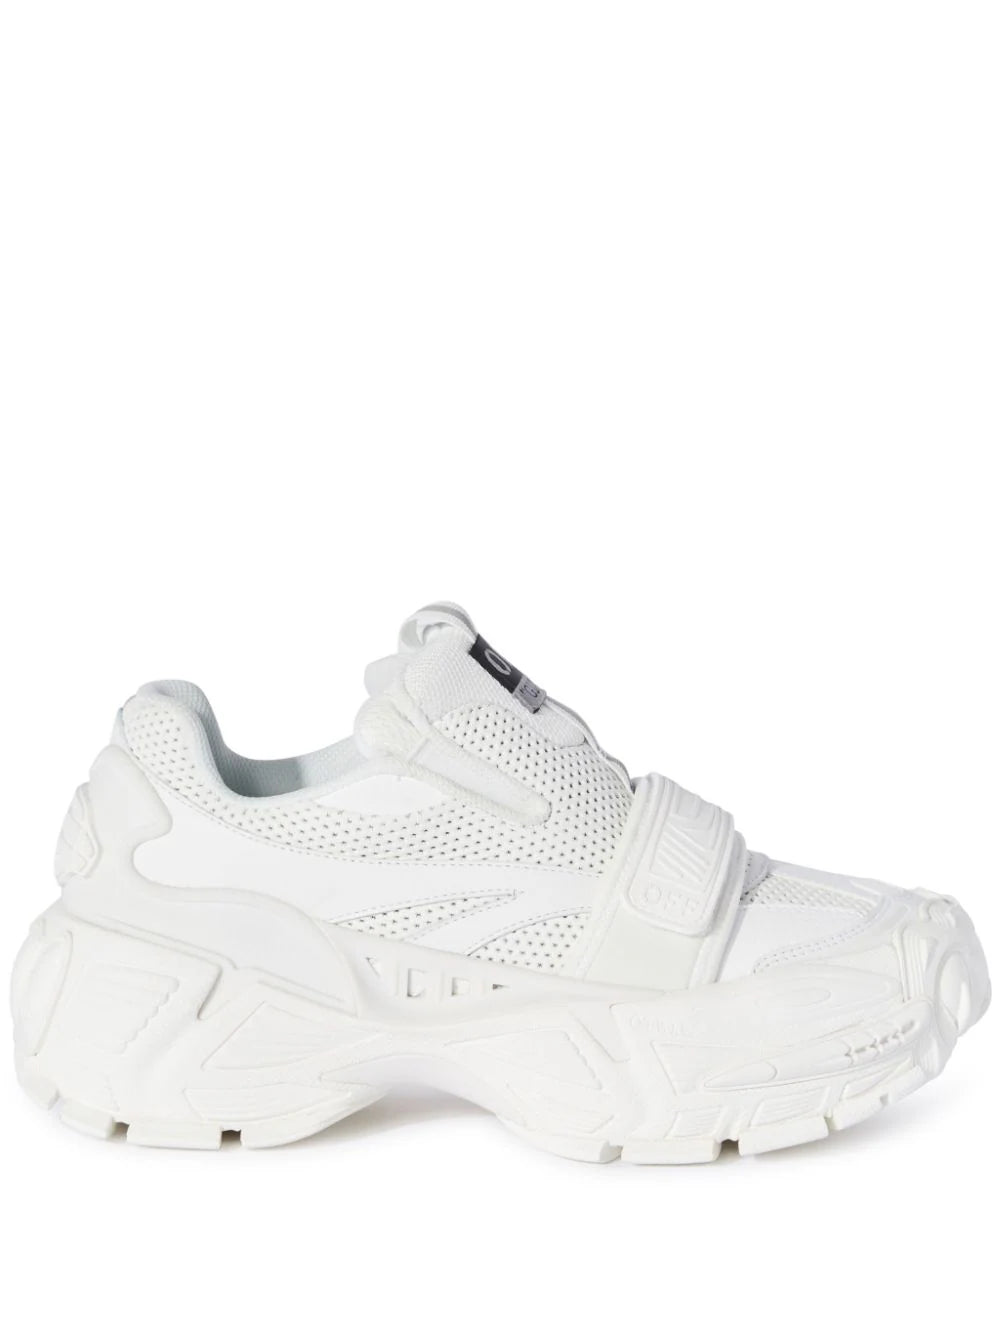 OFF-WHITE MEN Glove Slip On Low Top Leather Sneakers White - MAISONDEFASHION.COM